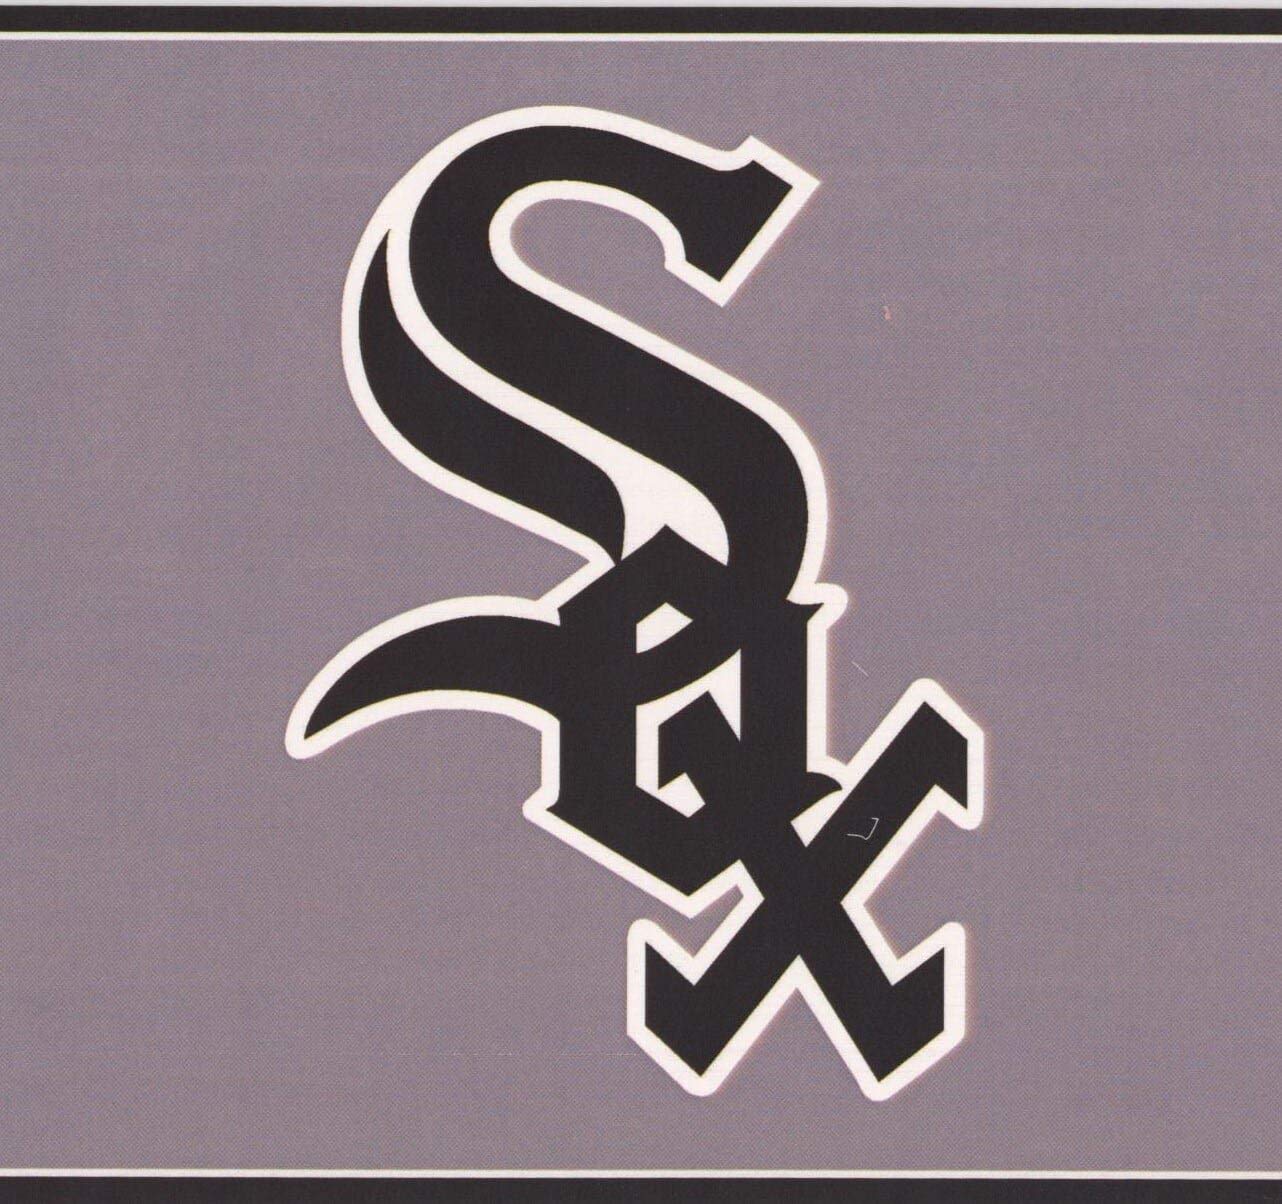 Chicago White Sox Logo 2019 - 1282x1204 Wallpaper - teahub.io